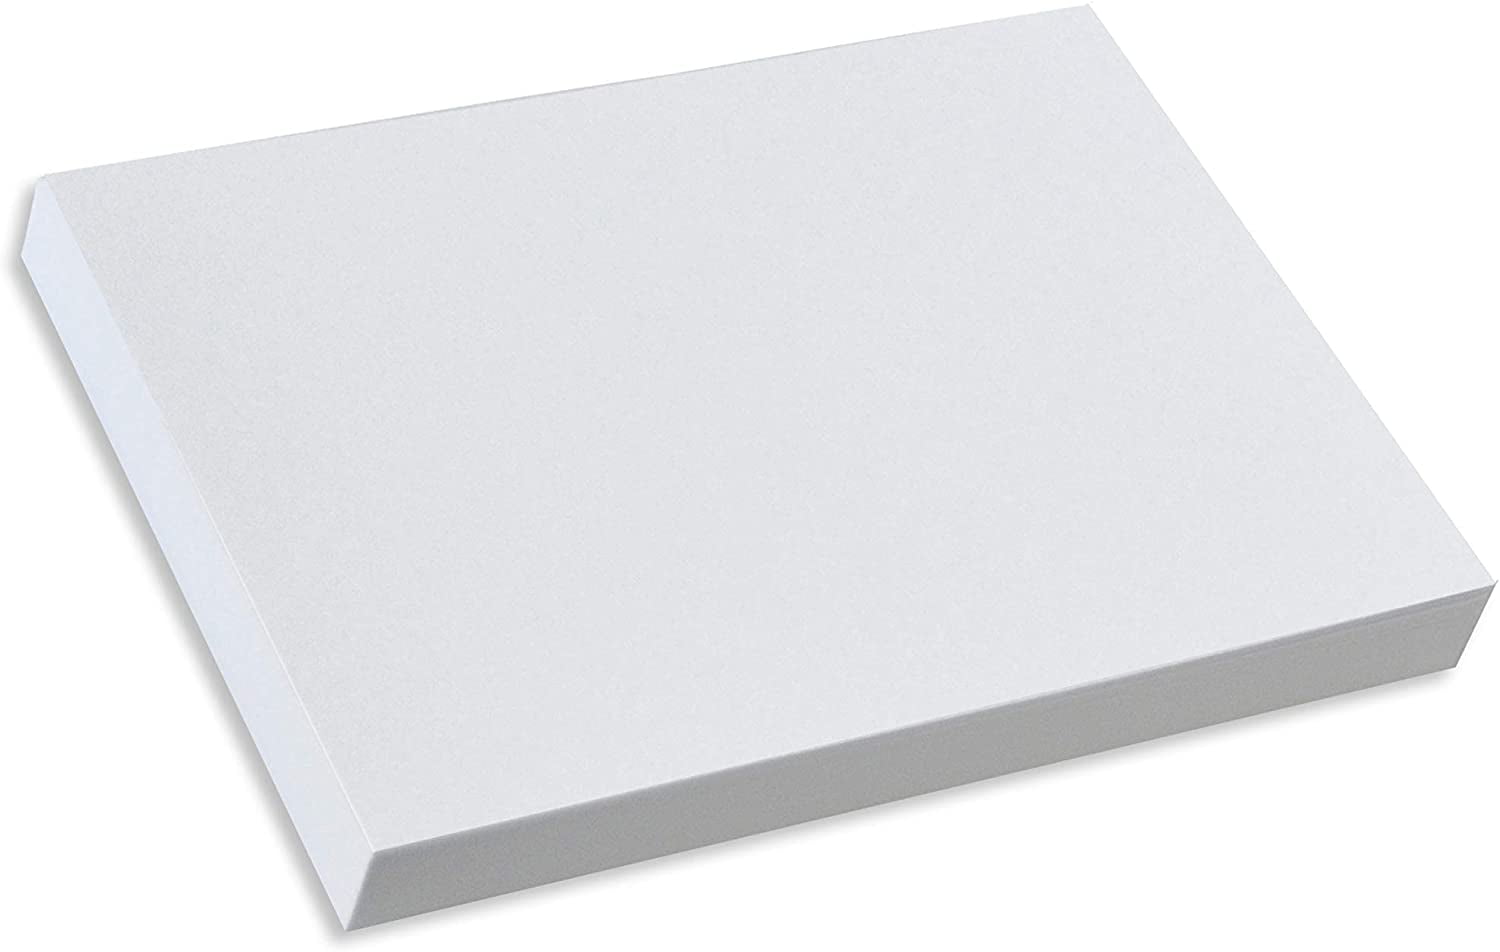 Home Advantage - (50 Pack) Blank Plain White 4x6 Index Cards Postcards